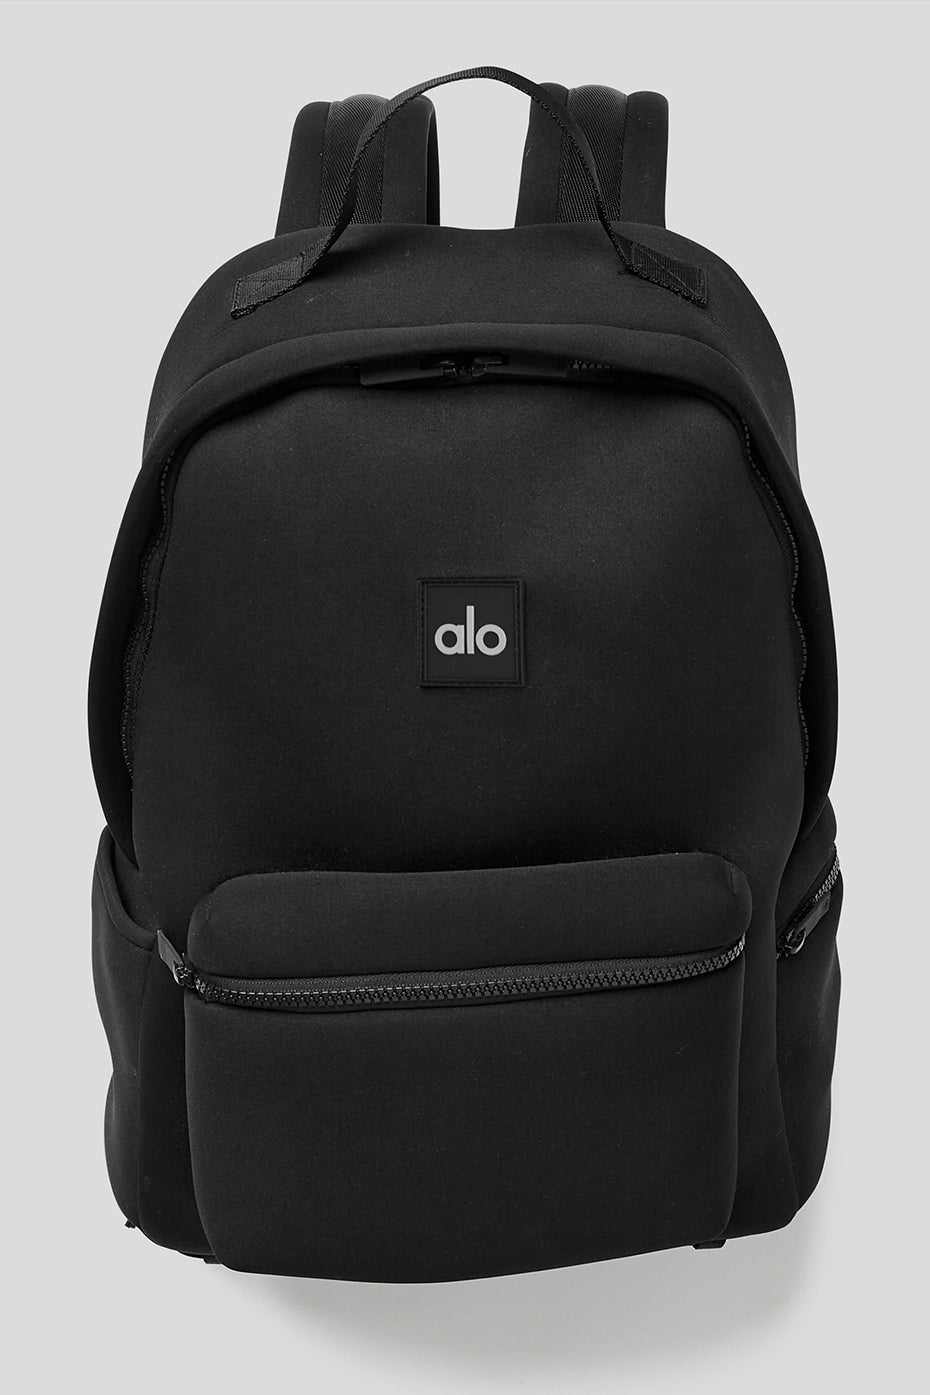 Shop ALO Yoga Unisex Plain Purses Crossbody Logo Bucket Bags by ChelseaLine